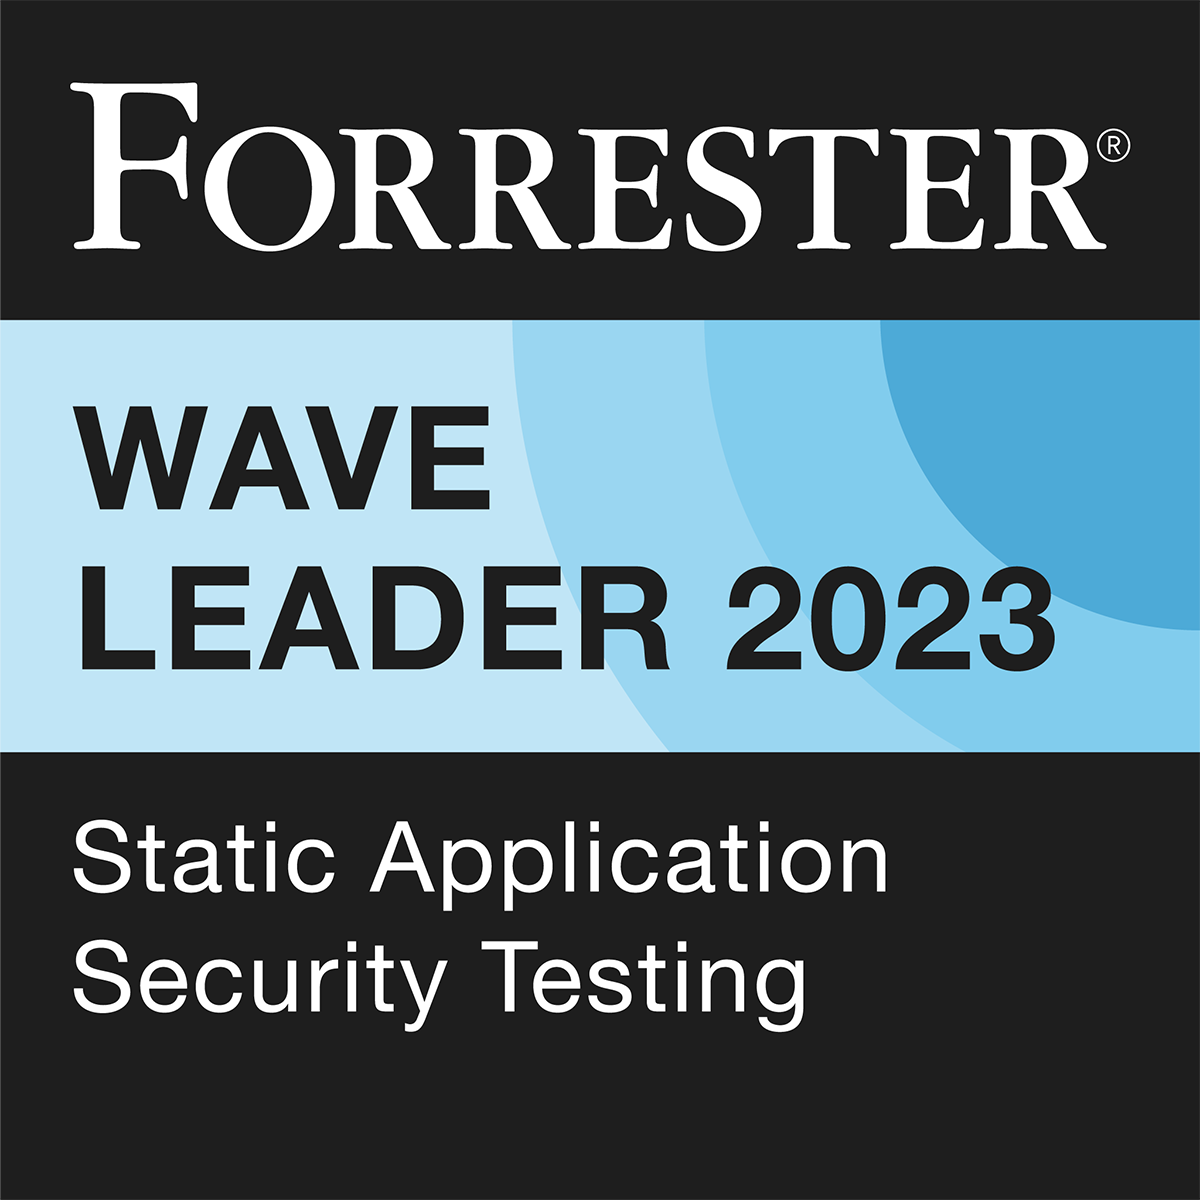 Forrester Wave Leader 2023 Static Application Security Testing